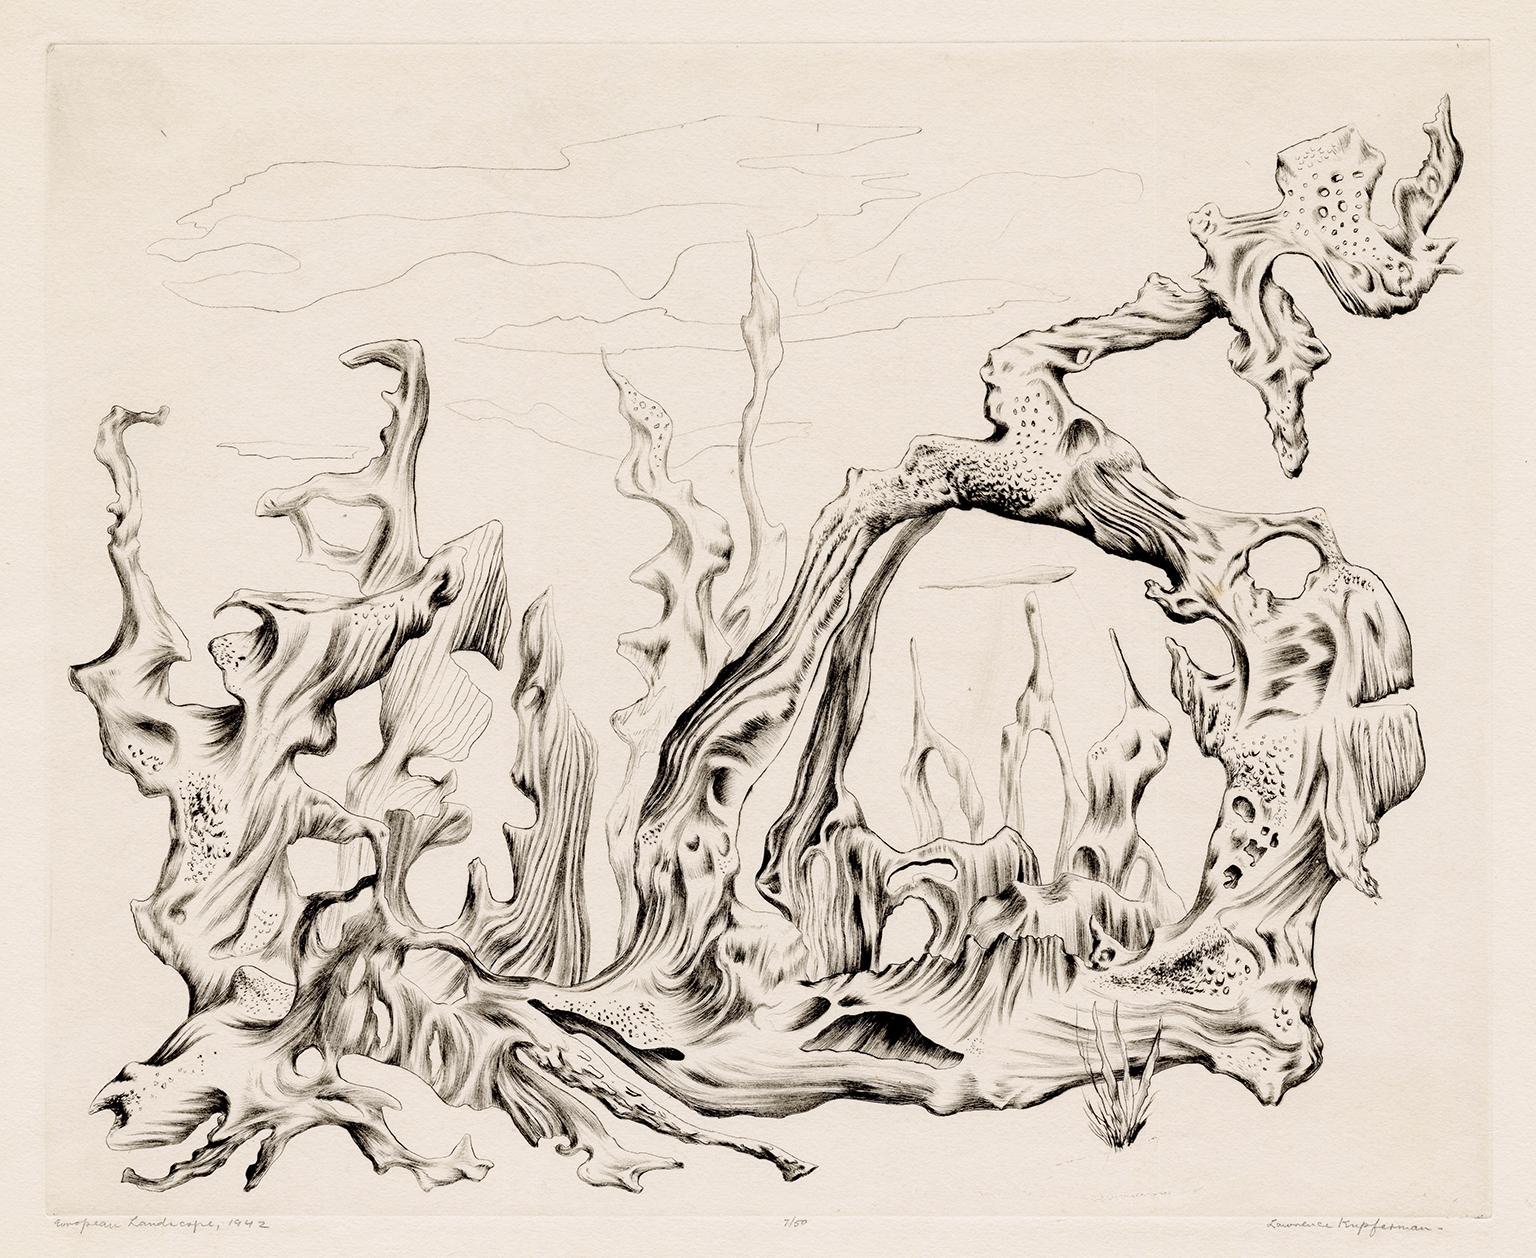 Lawrence Kupferman Abstract Print - 'European Landscape' —Mid-century American Surrealism